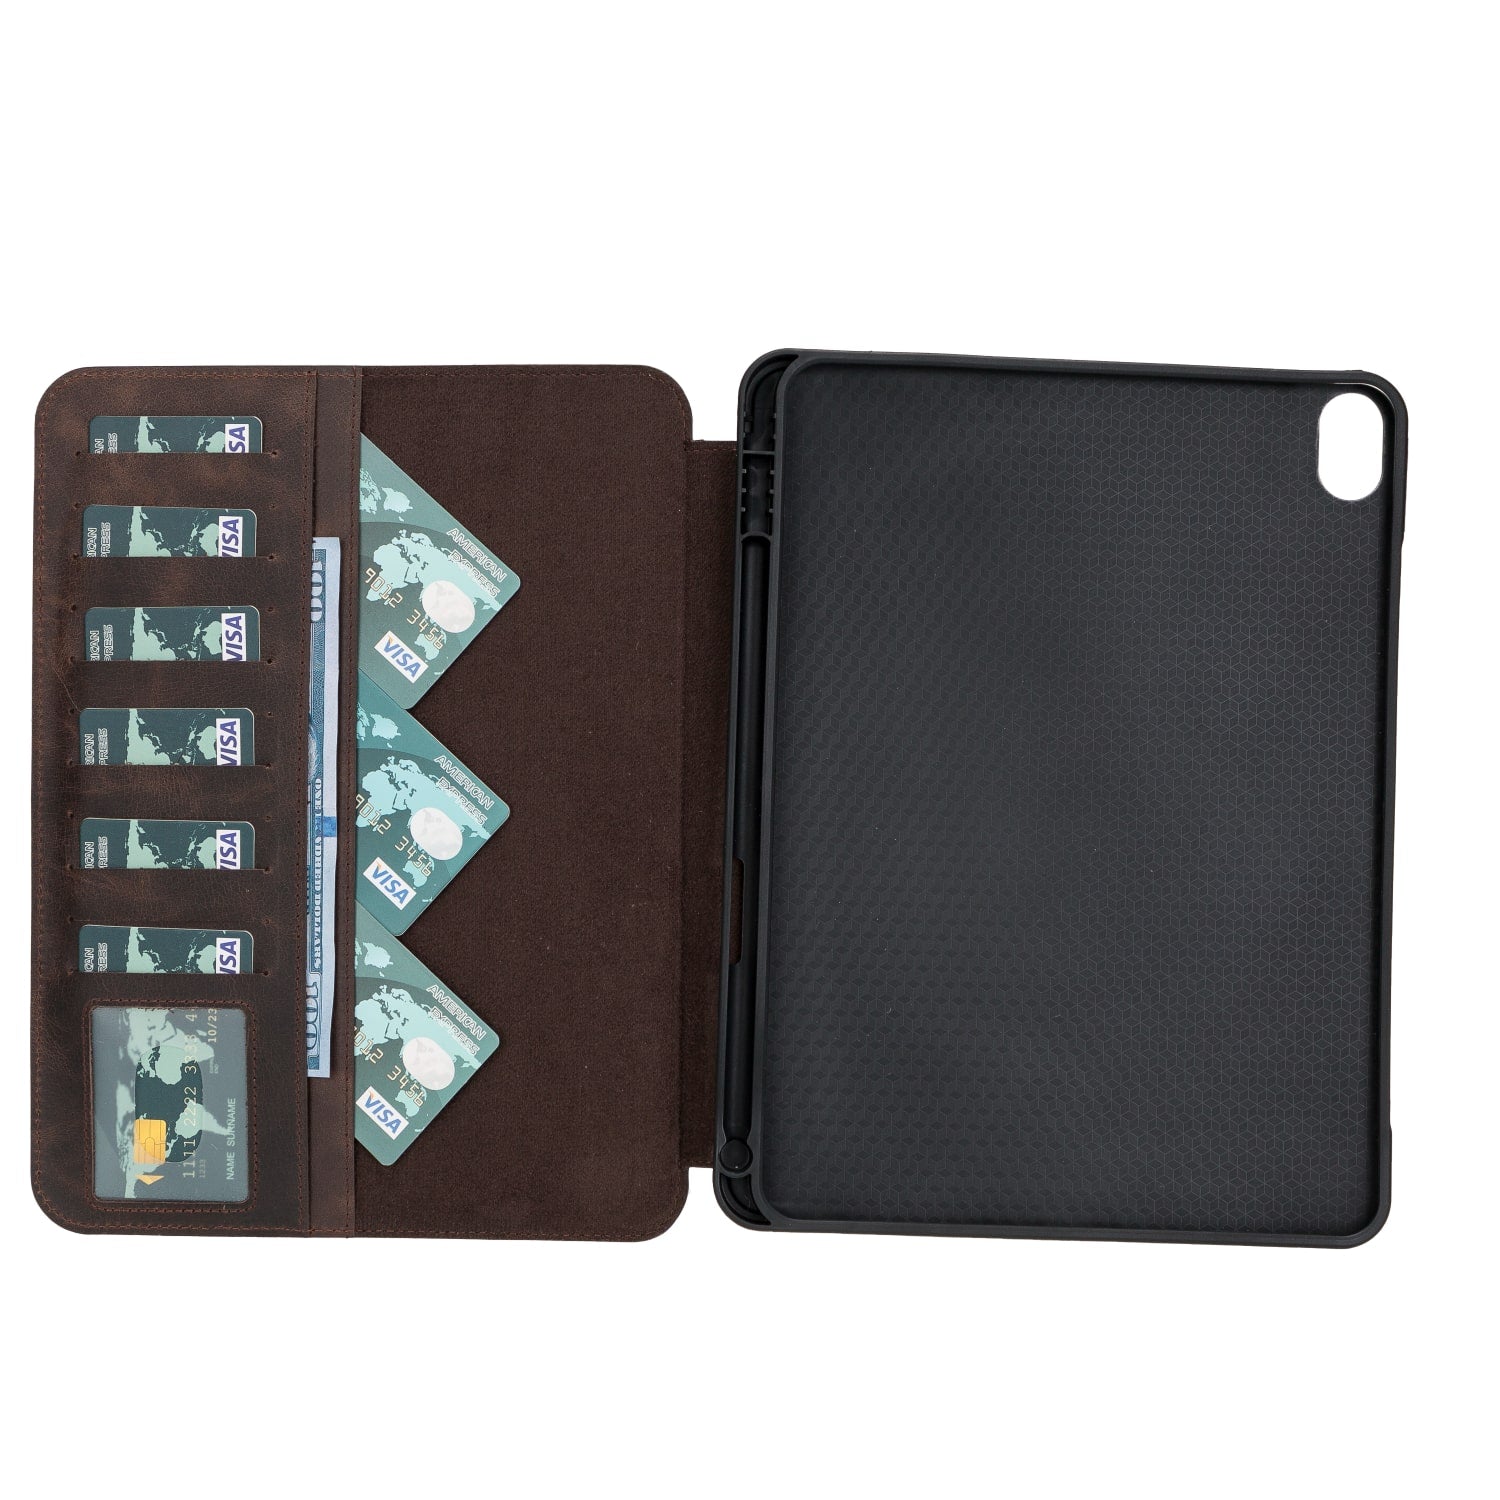 Tan Brown Leather iPad Air 10.9 Inc Smart Folio Case with Apple Pen Holder - Bomonti - 2